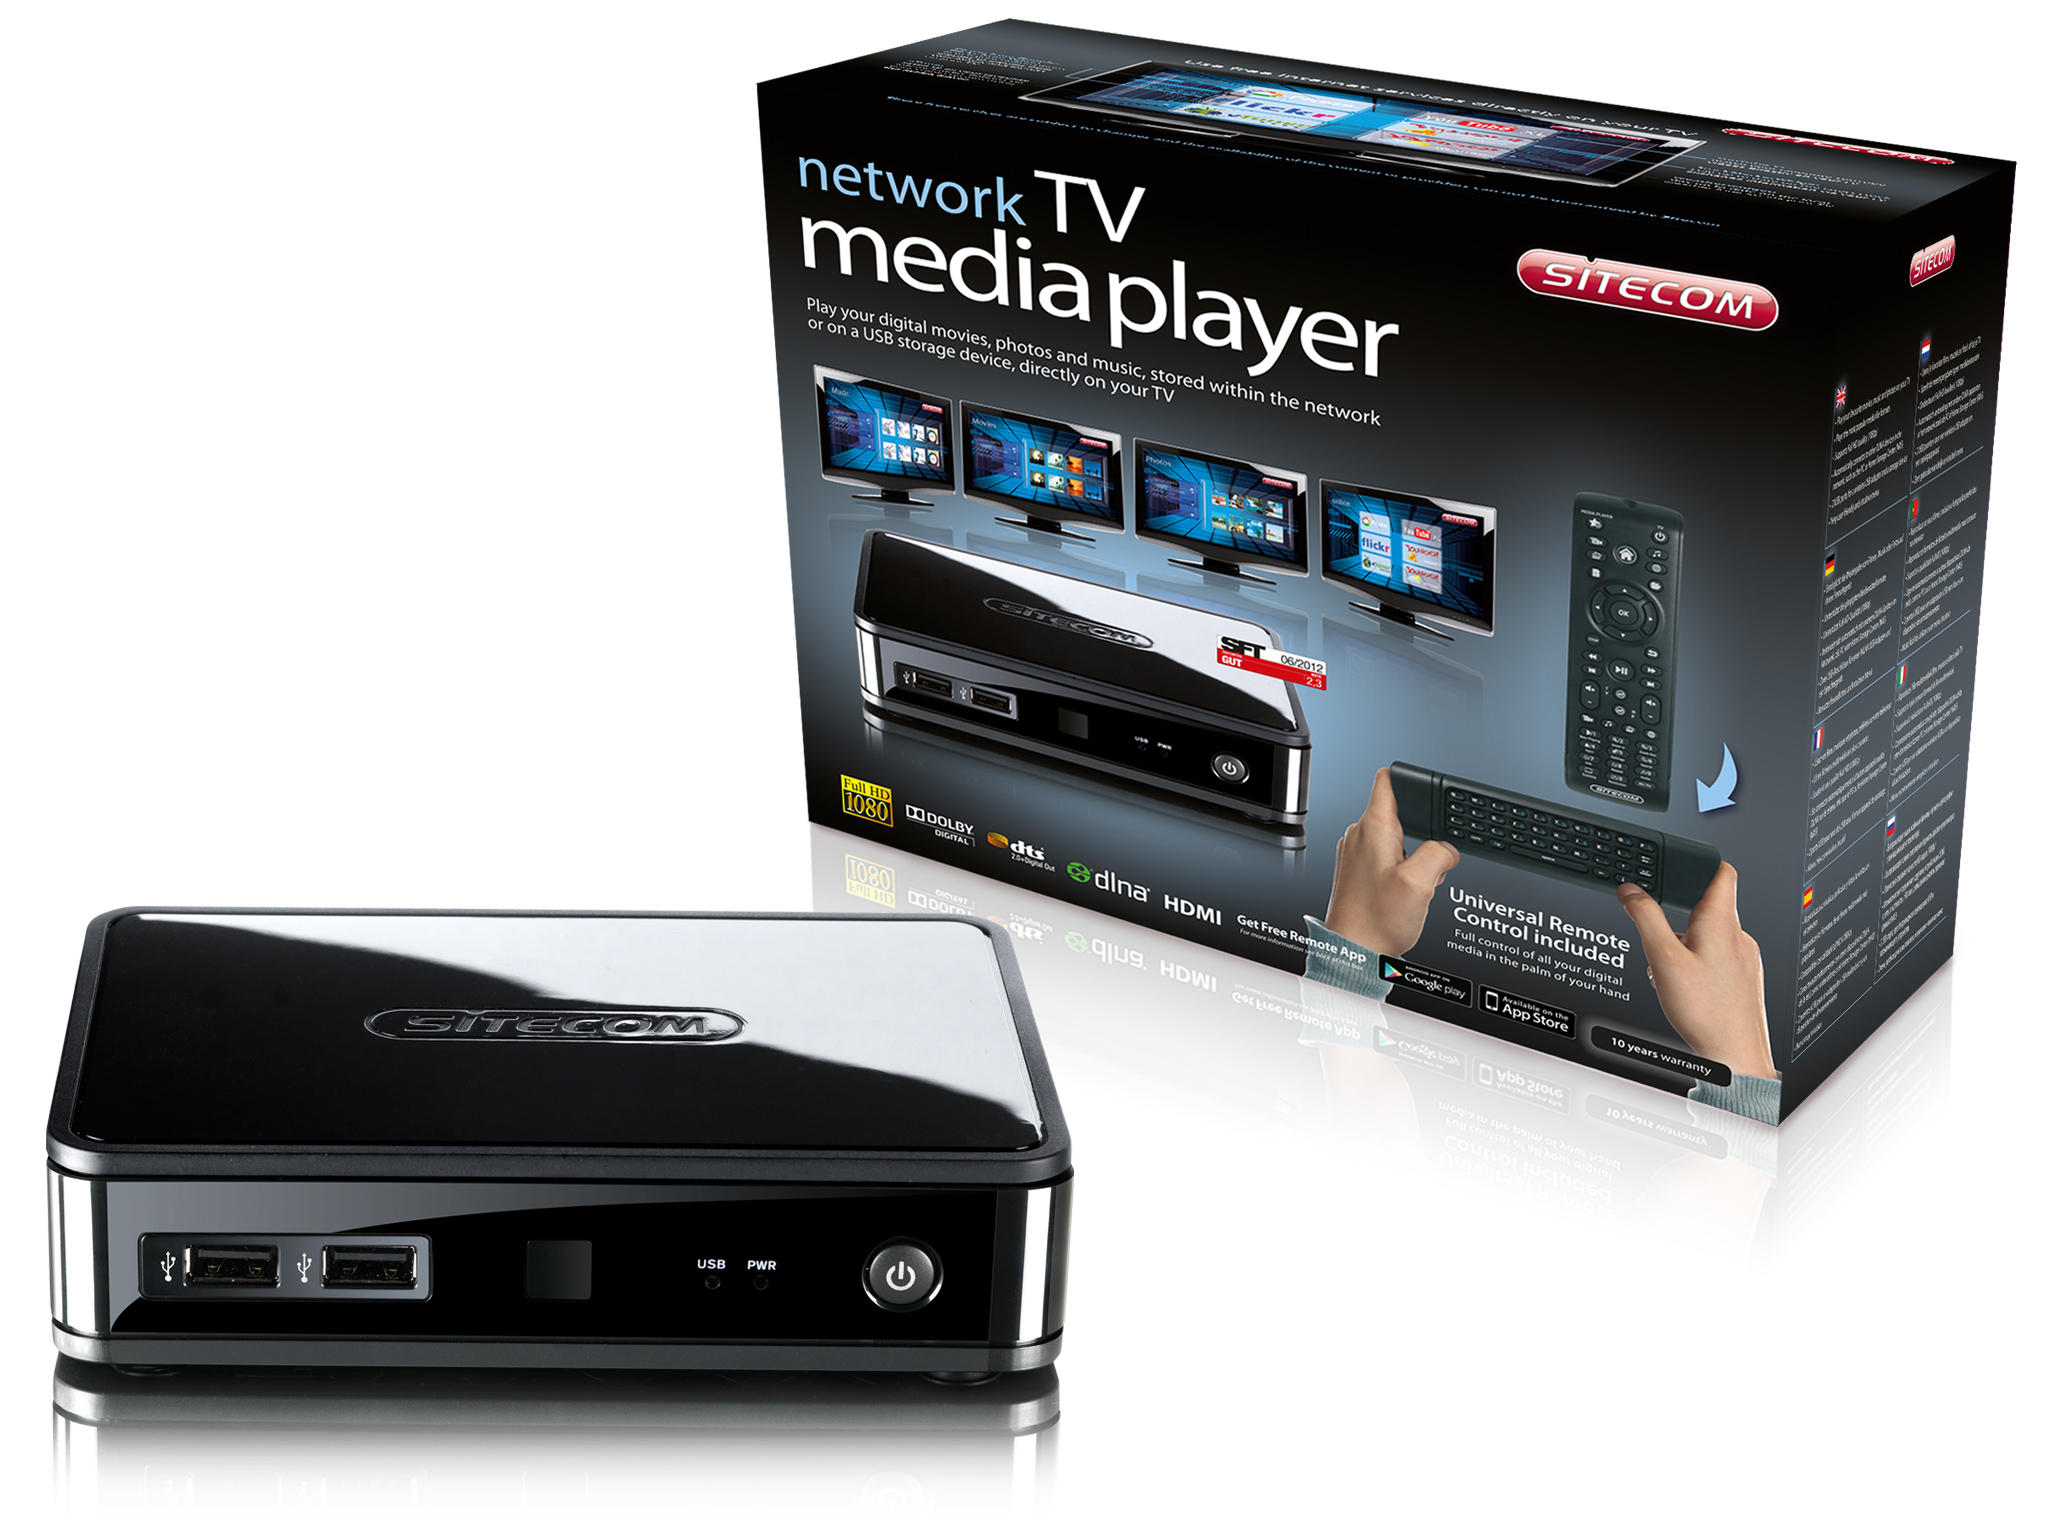 Sitecom Network TV Media Player MD-273